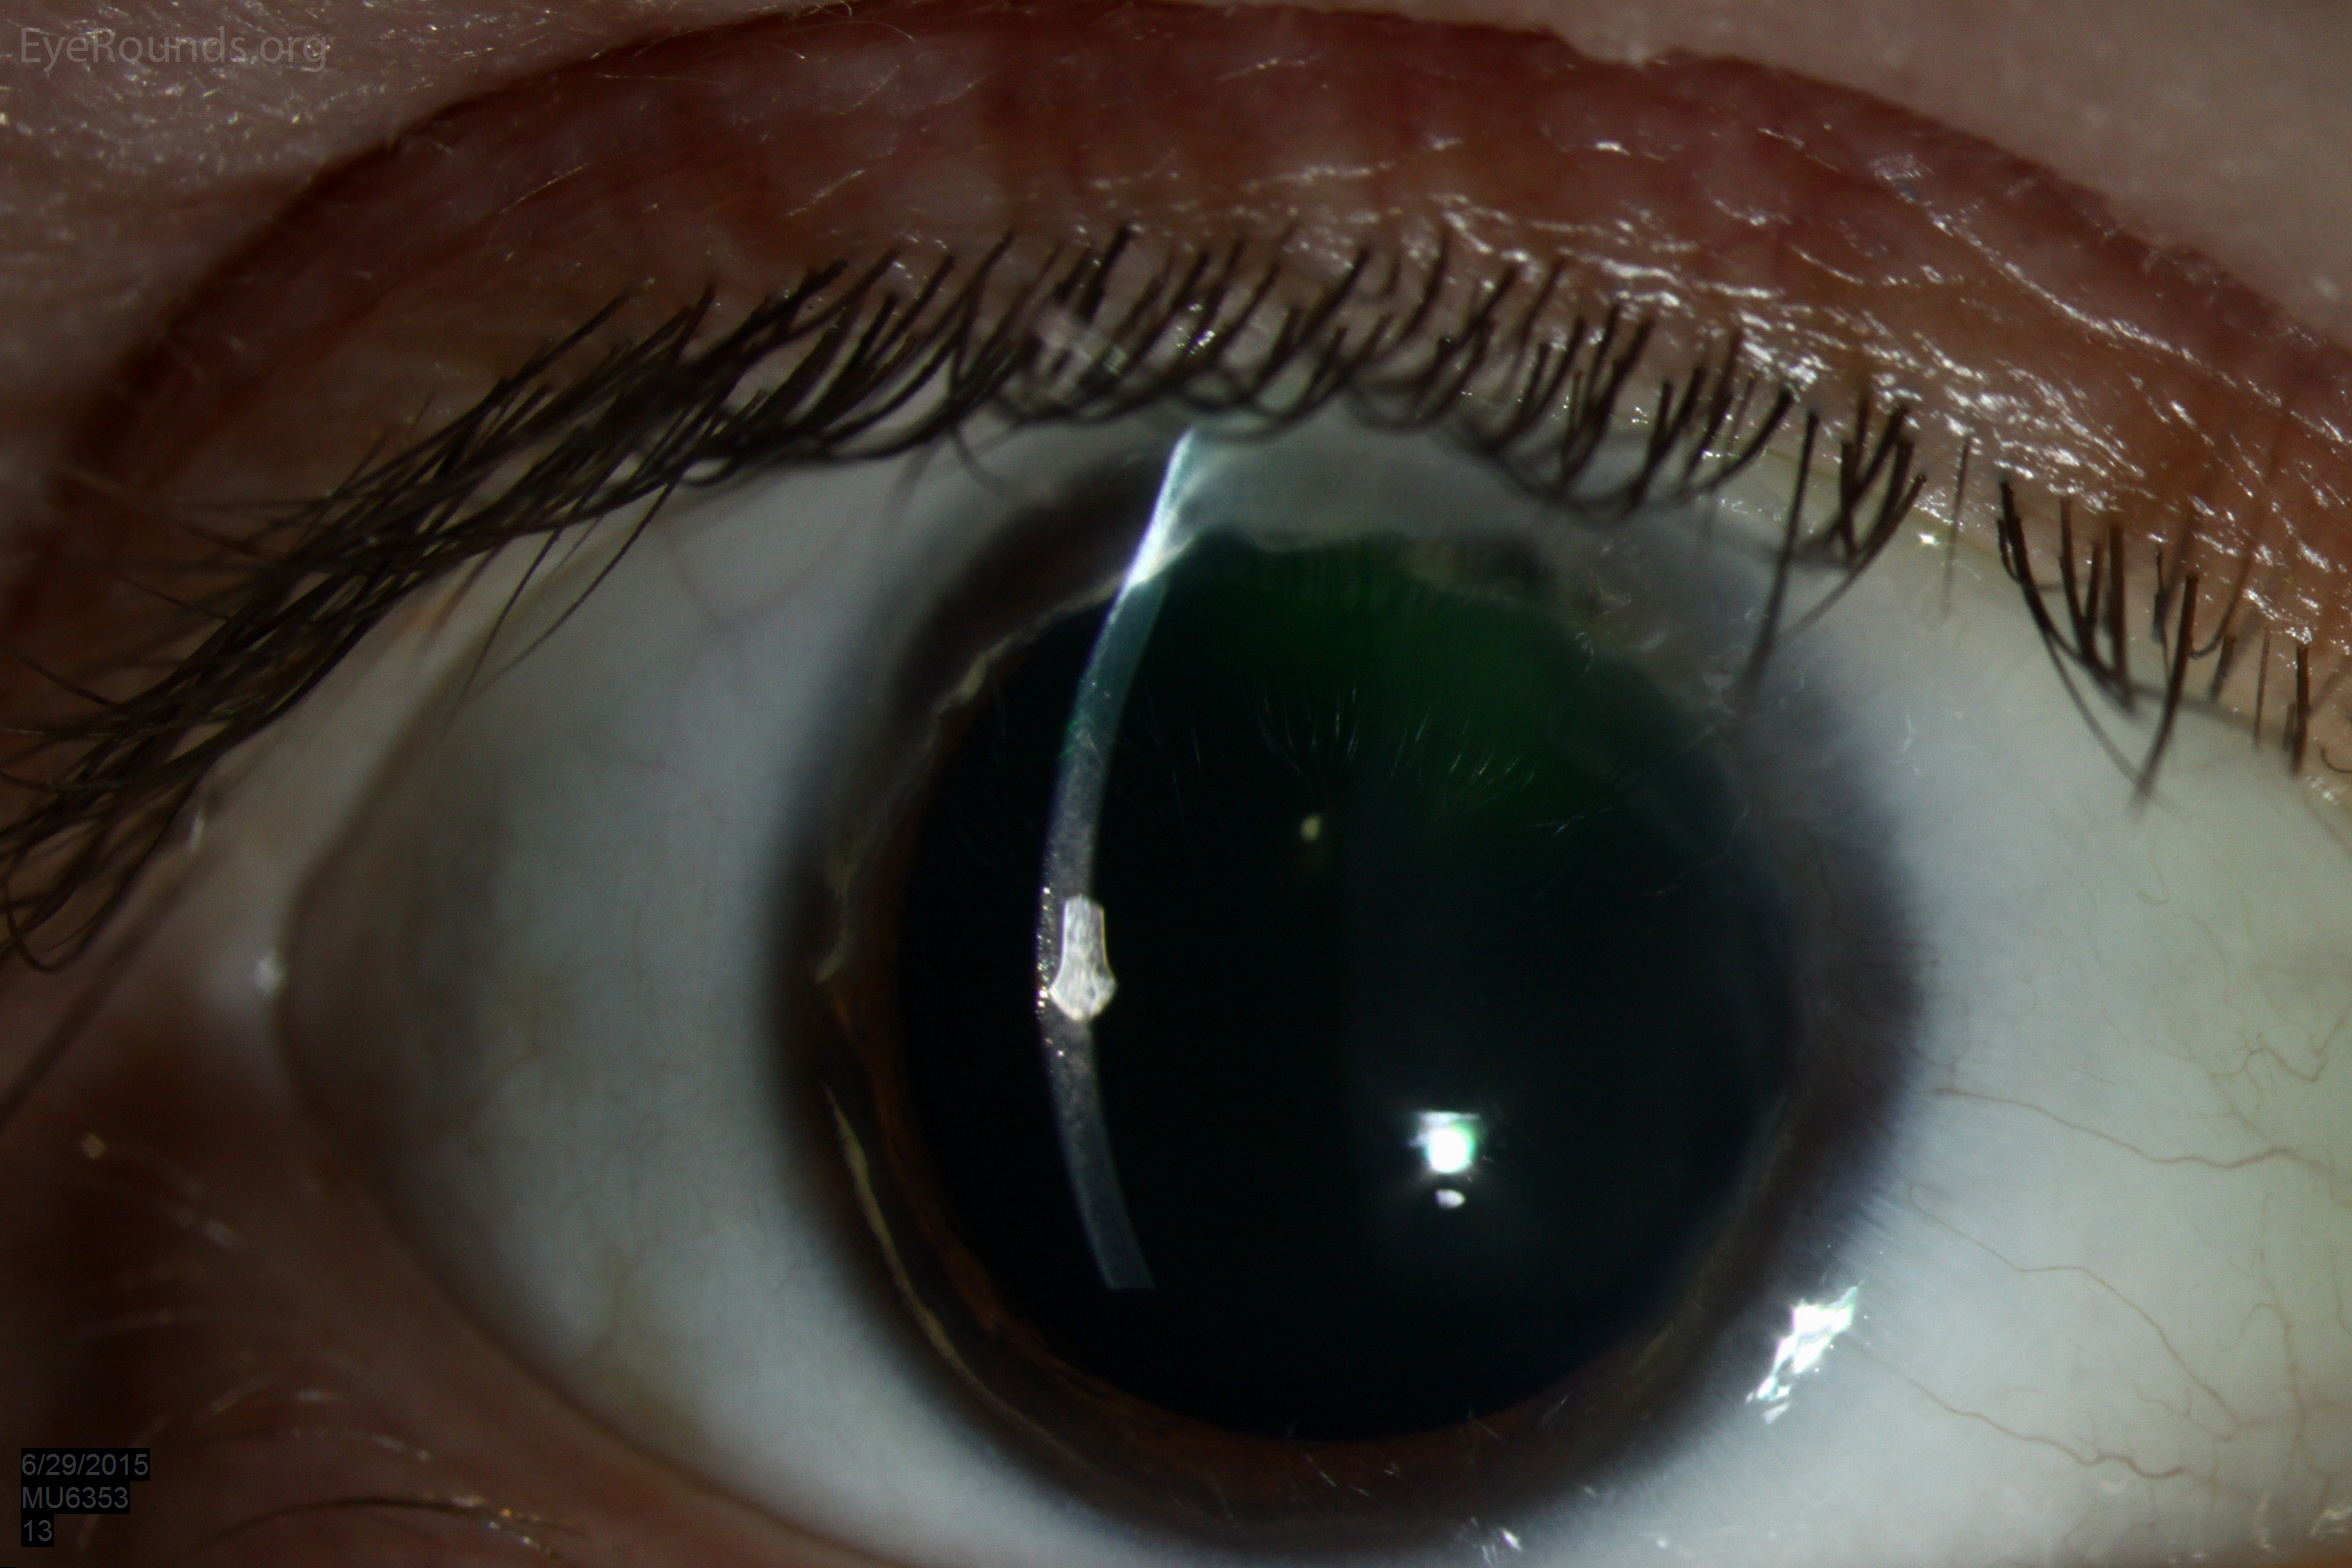  External view of slit lamp eye